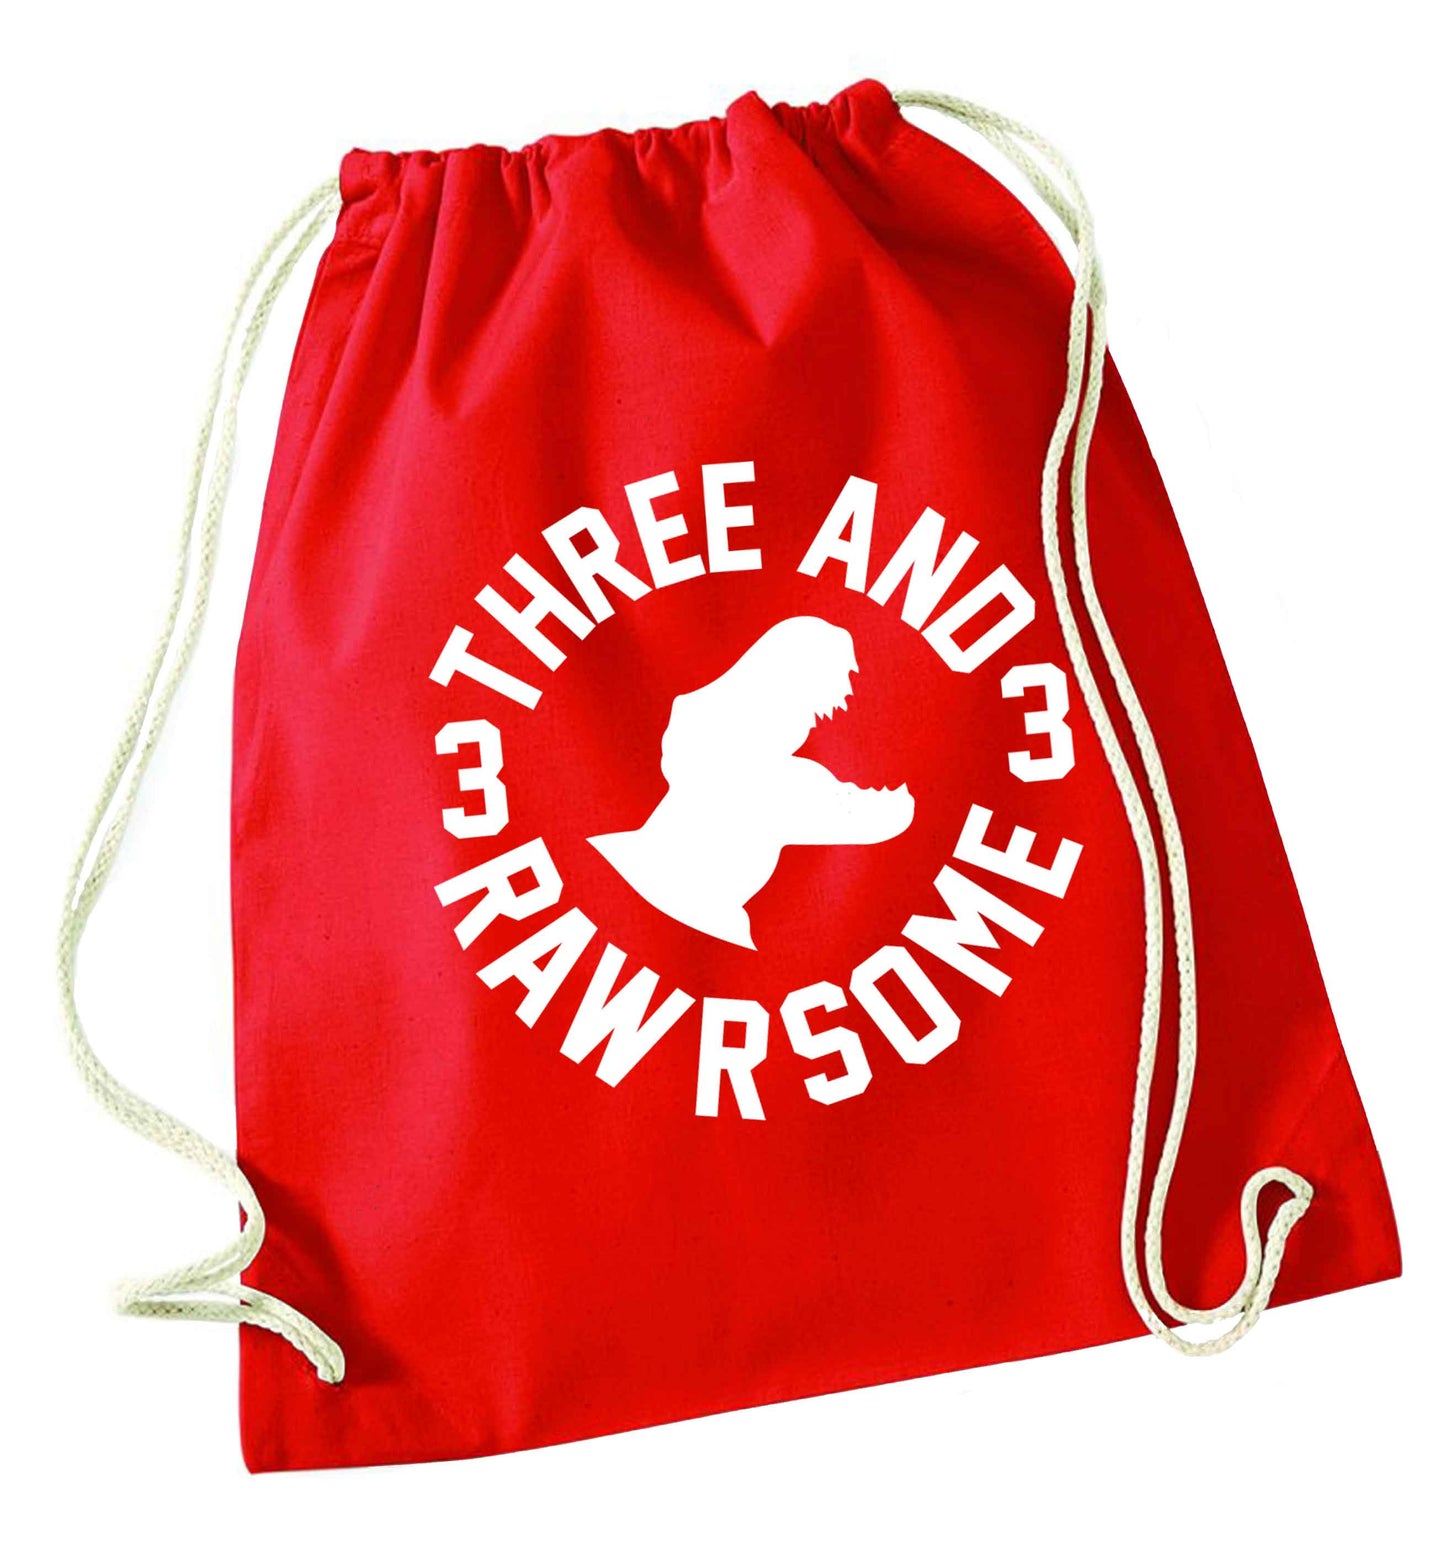 Three and rawrsome red drawstring bag 